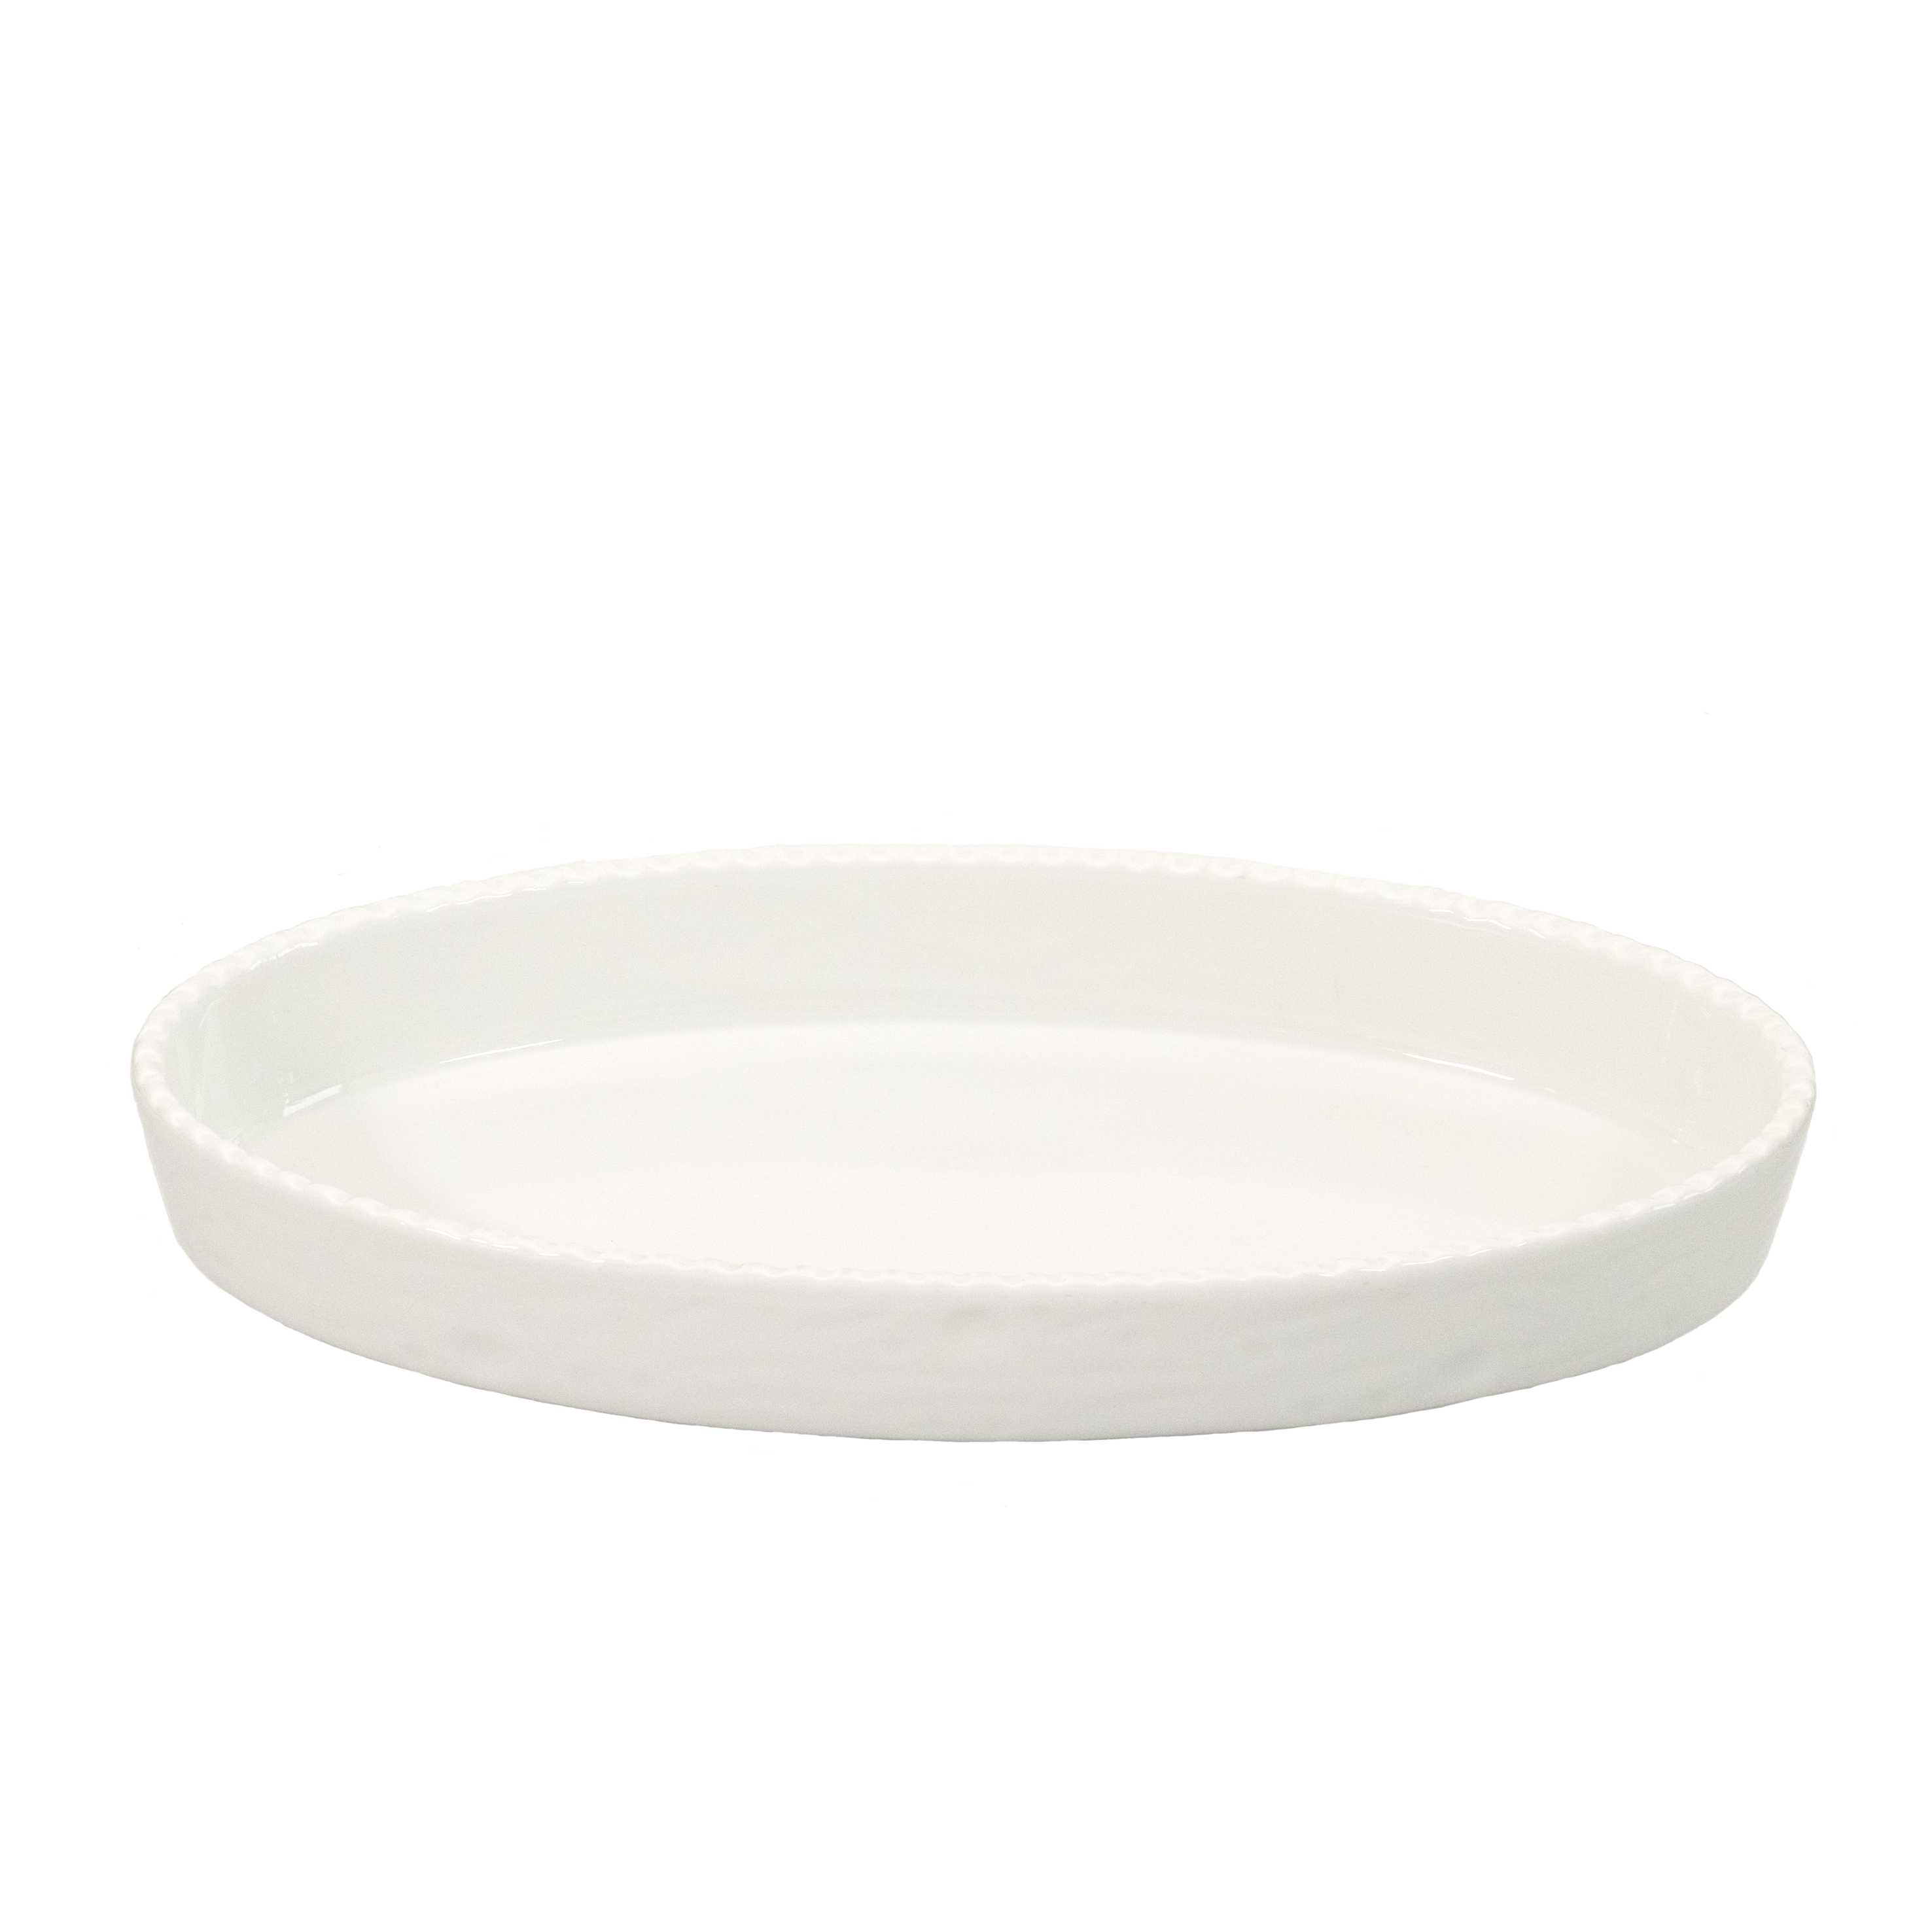 BAKING DISH oval Porcelain cm 38